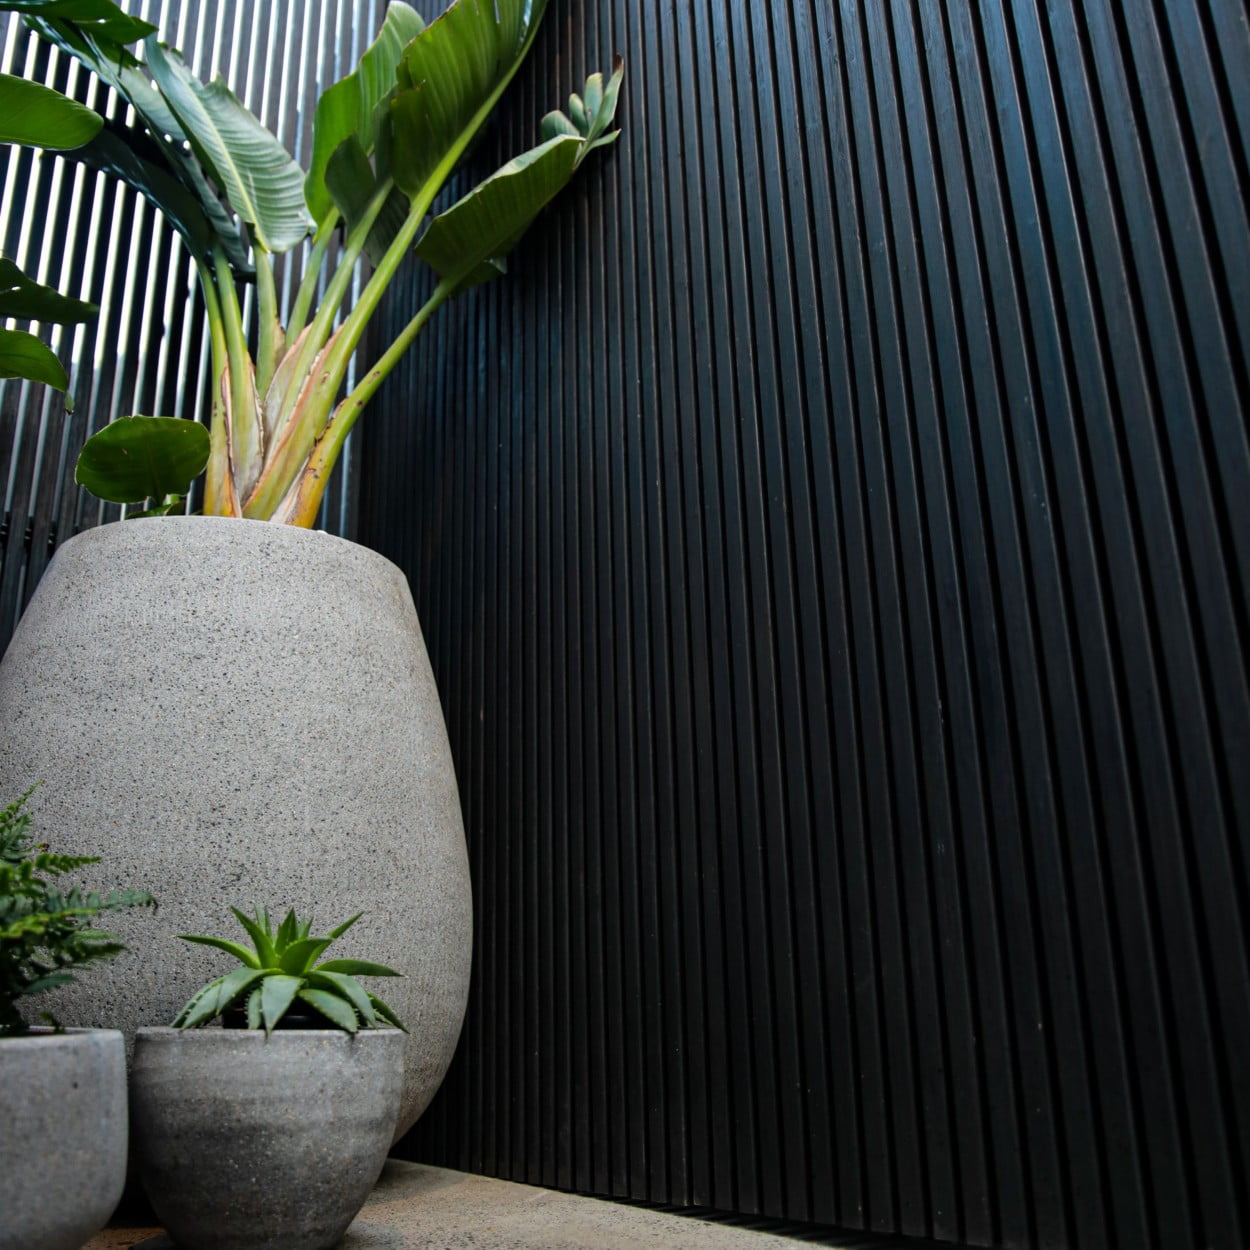 Black Bamboo Fence Slats with Pot Plant